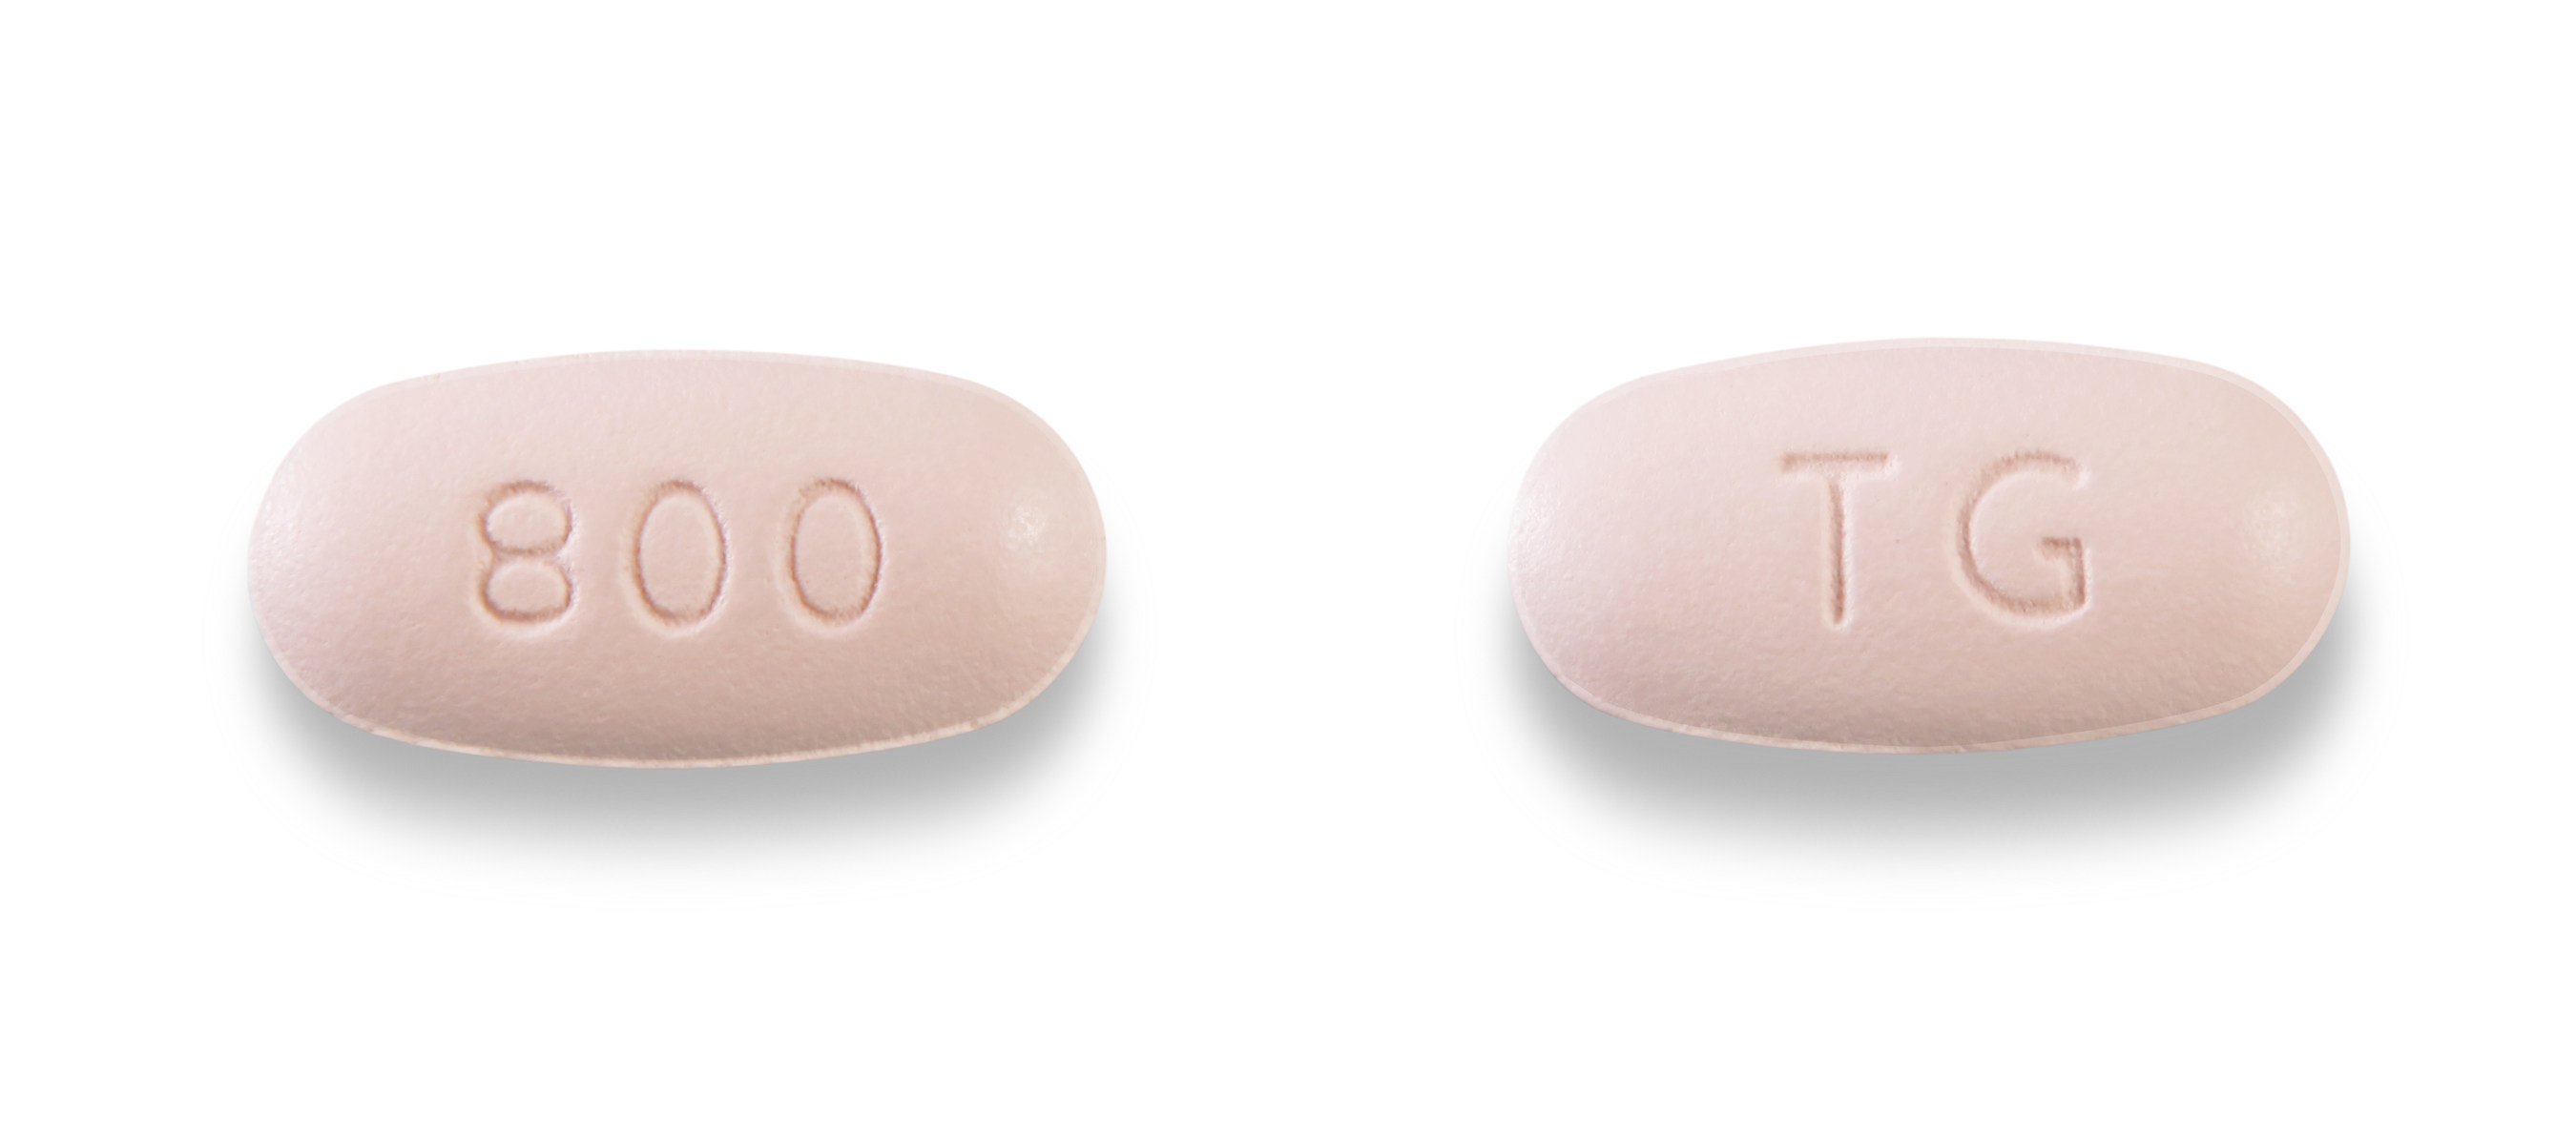 PREZCOBIX(TM) (darunavir 800mg / cobicistat 150mg) Tablets